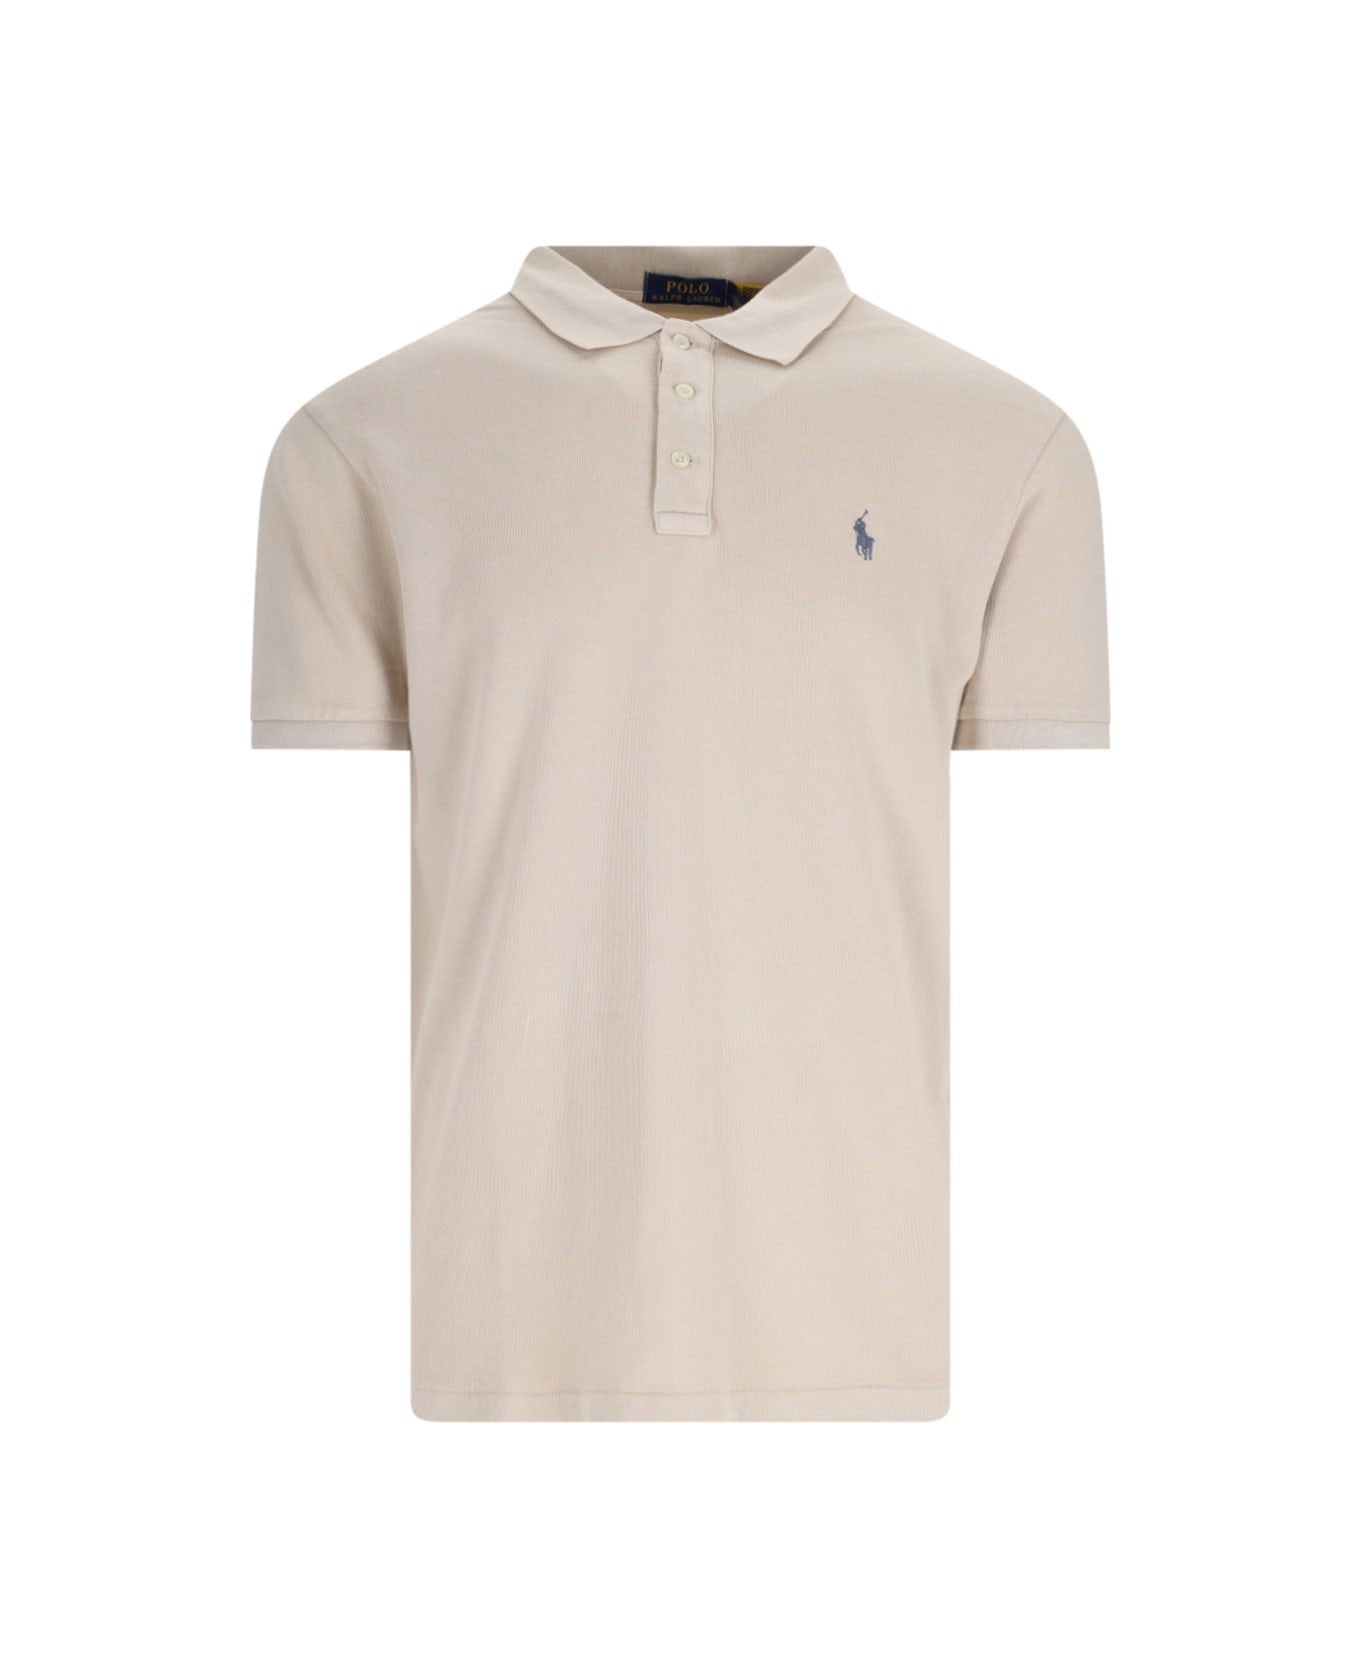 Polo Ralph Lauren Logo Polo Shirt - Beige シャツ